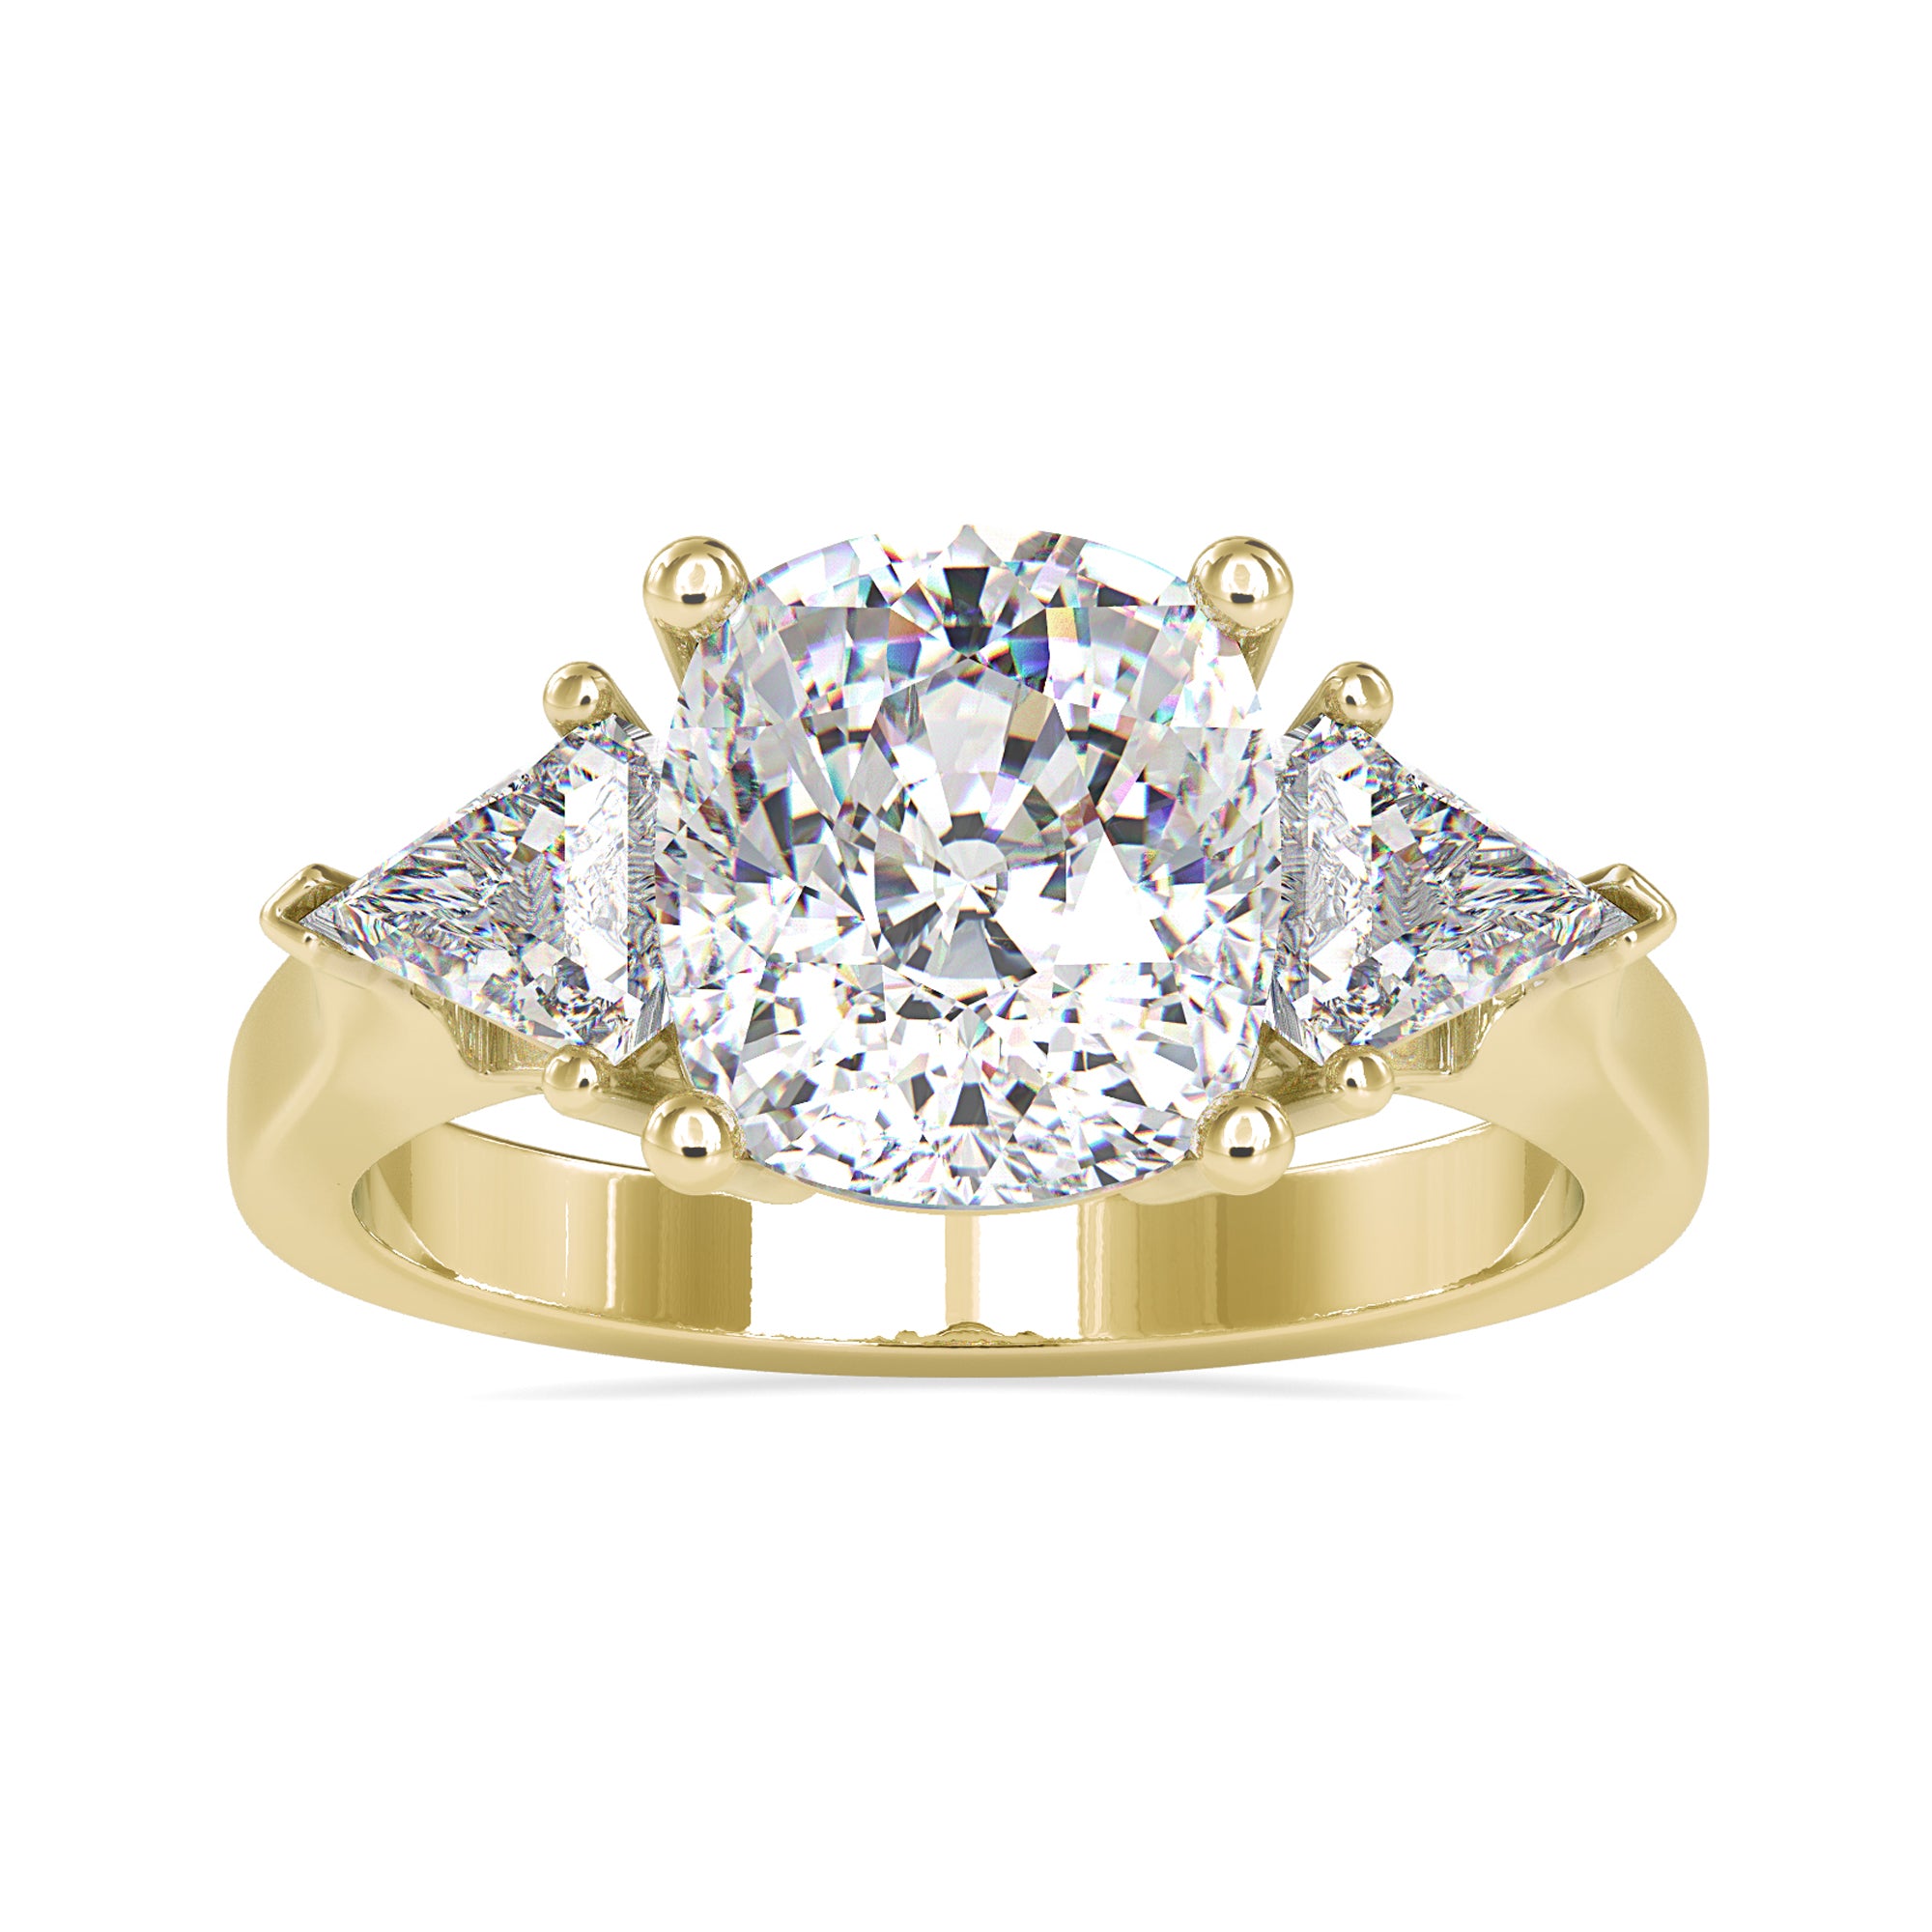 three stones engagement rings - diamondrensu